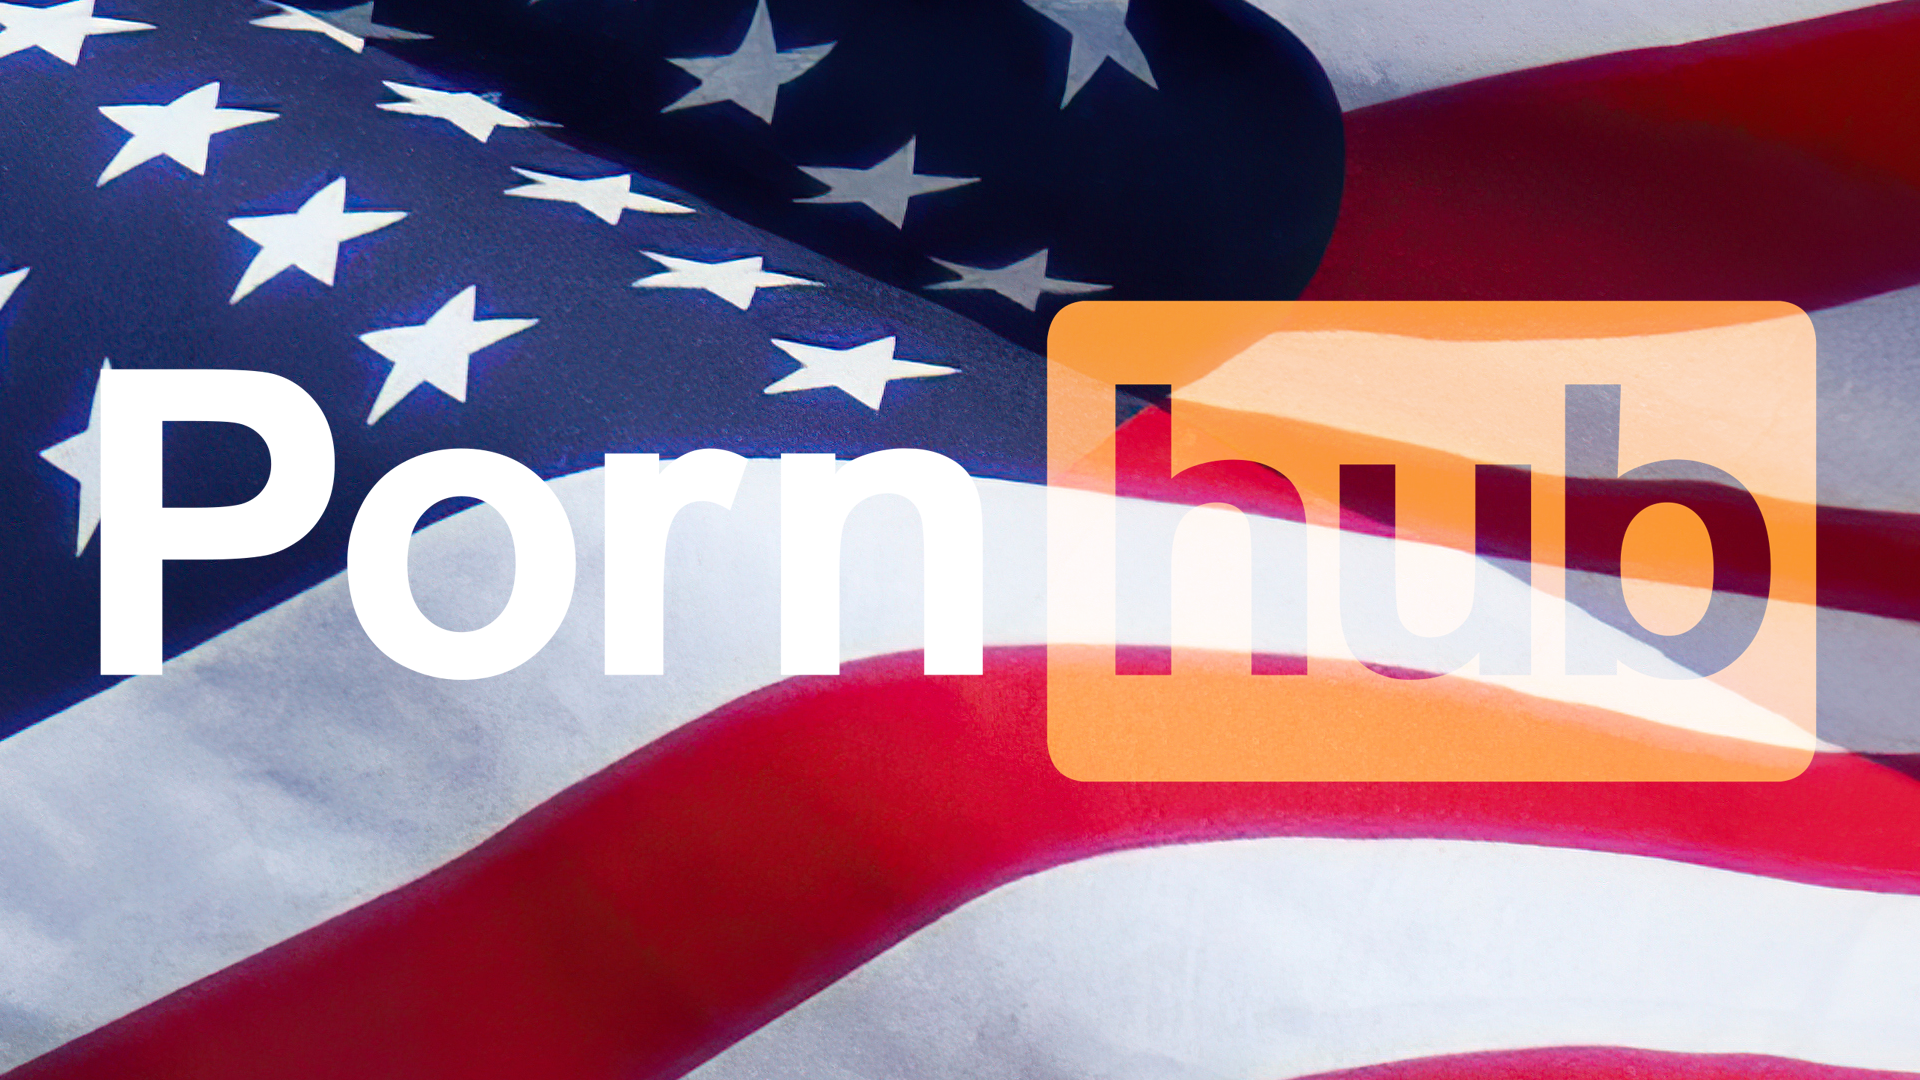 american flag with pornhub logo overlaid